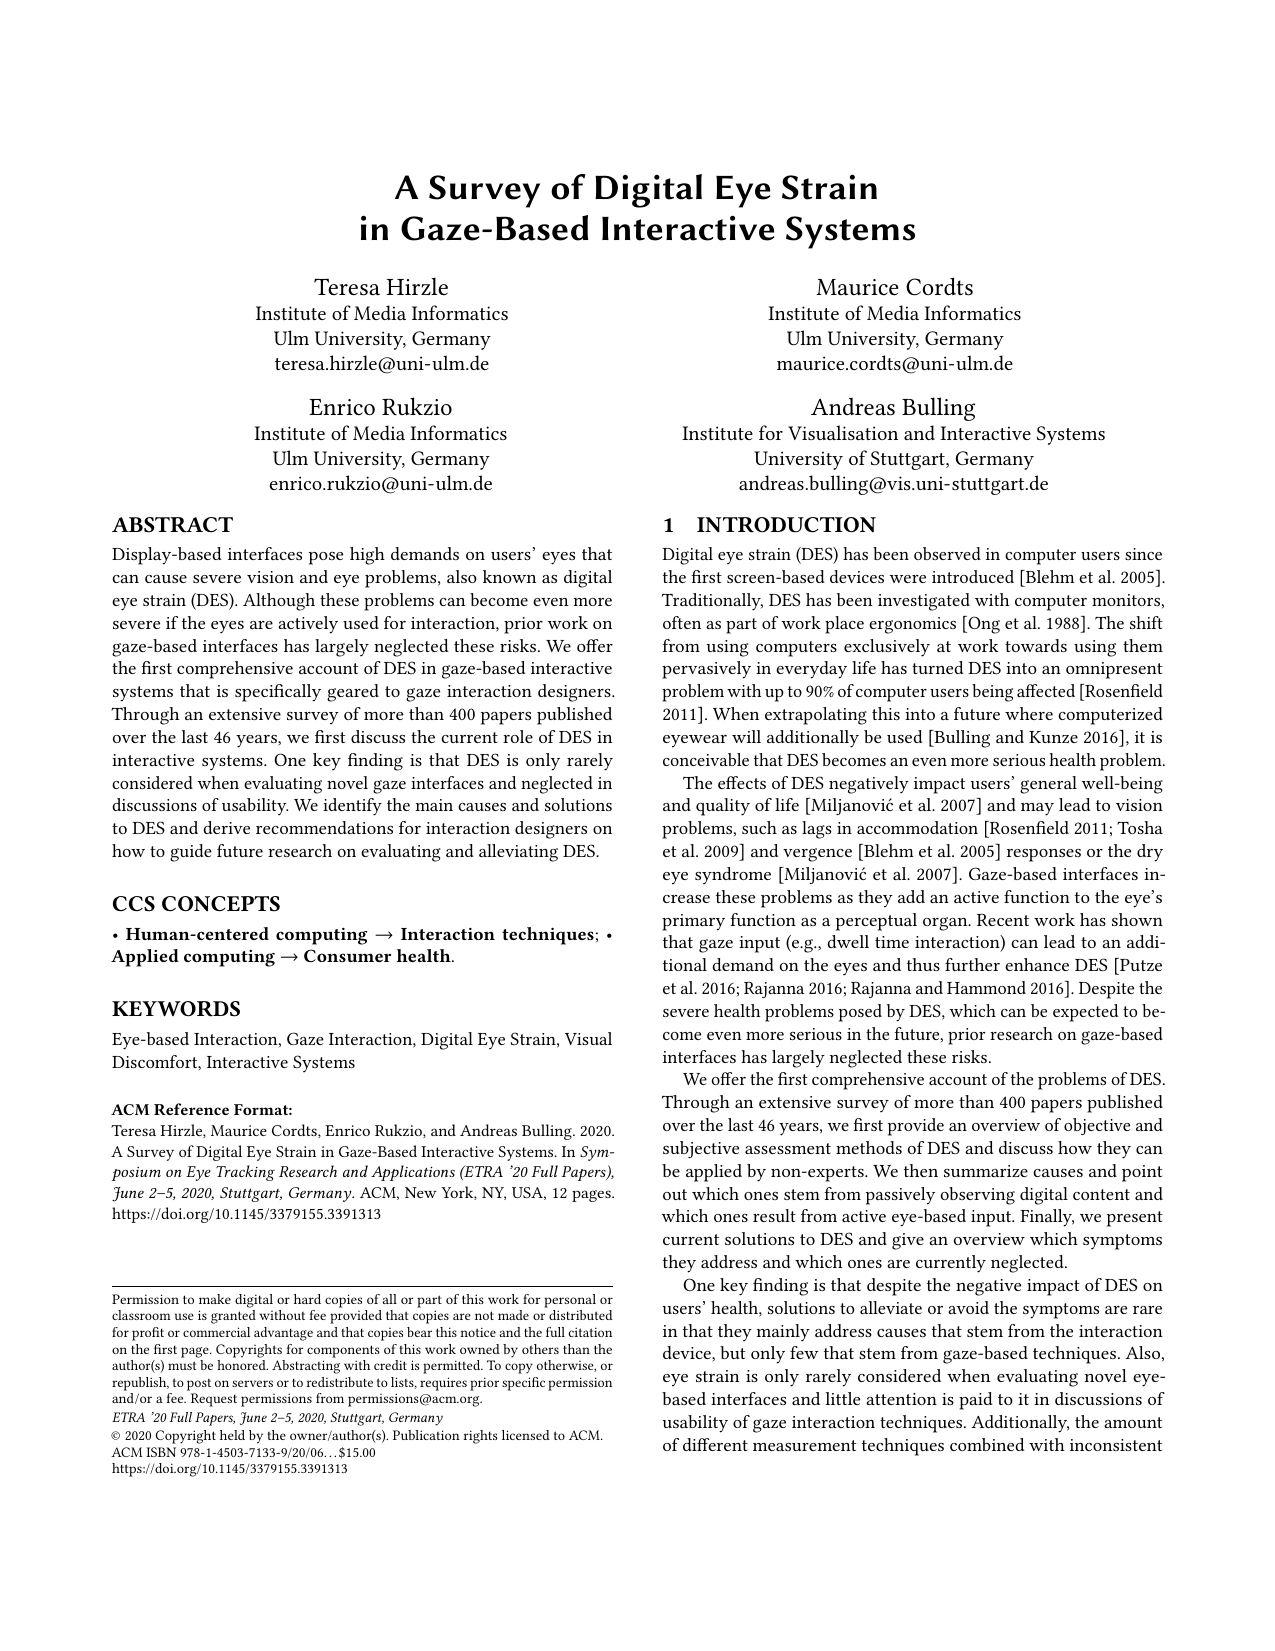 A Survey of Digital Eye Strain in Gaze-Based Interactive Systems